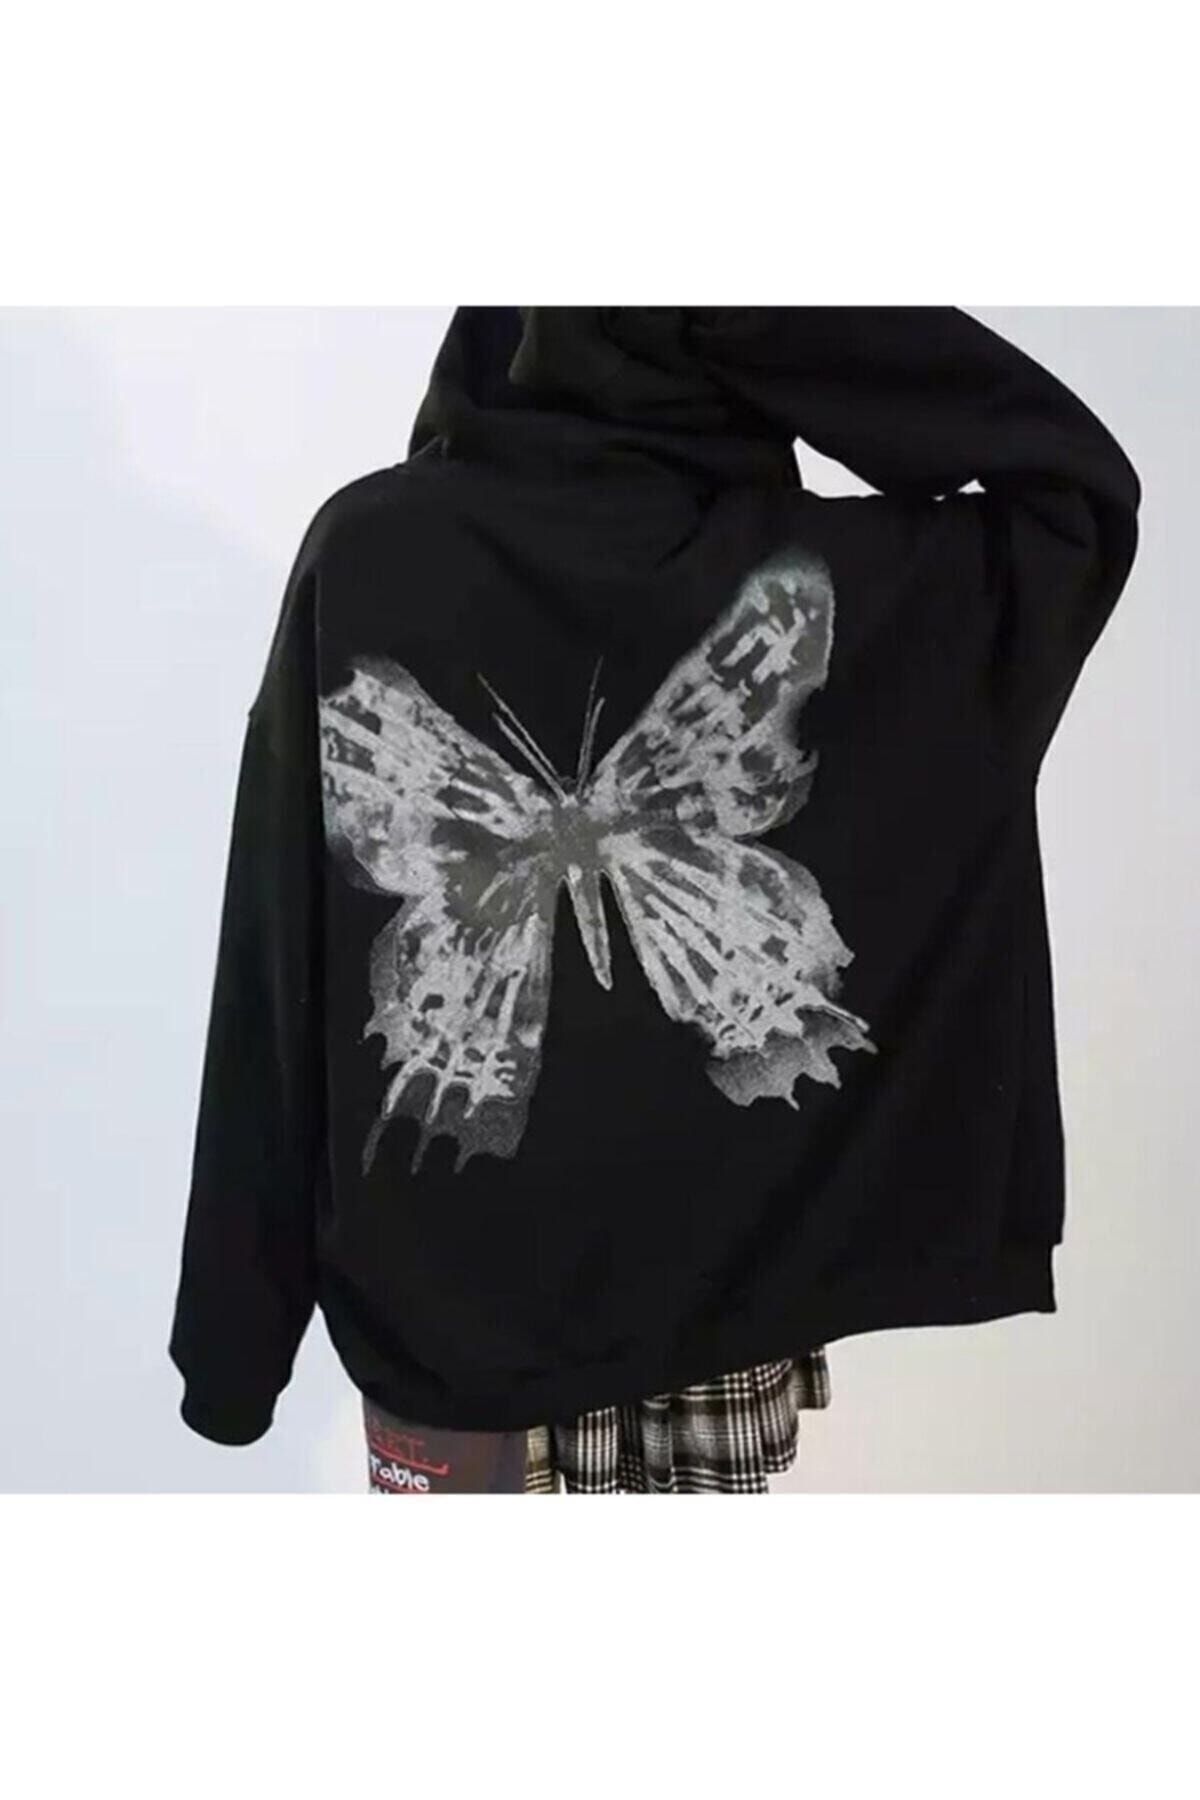 Köstebek Codazzreet - Butterfly unisex Kapşonlu Fermuarlı Sweatshirt